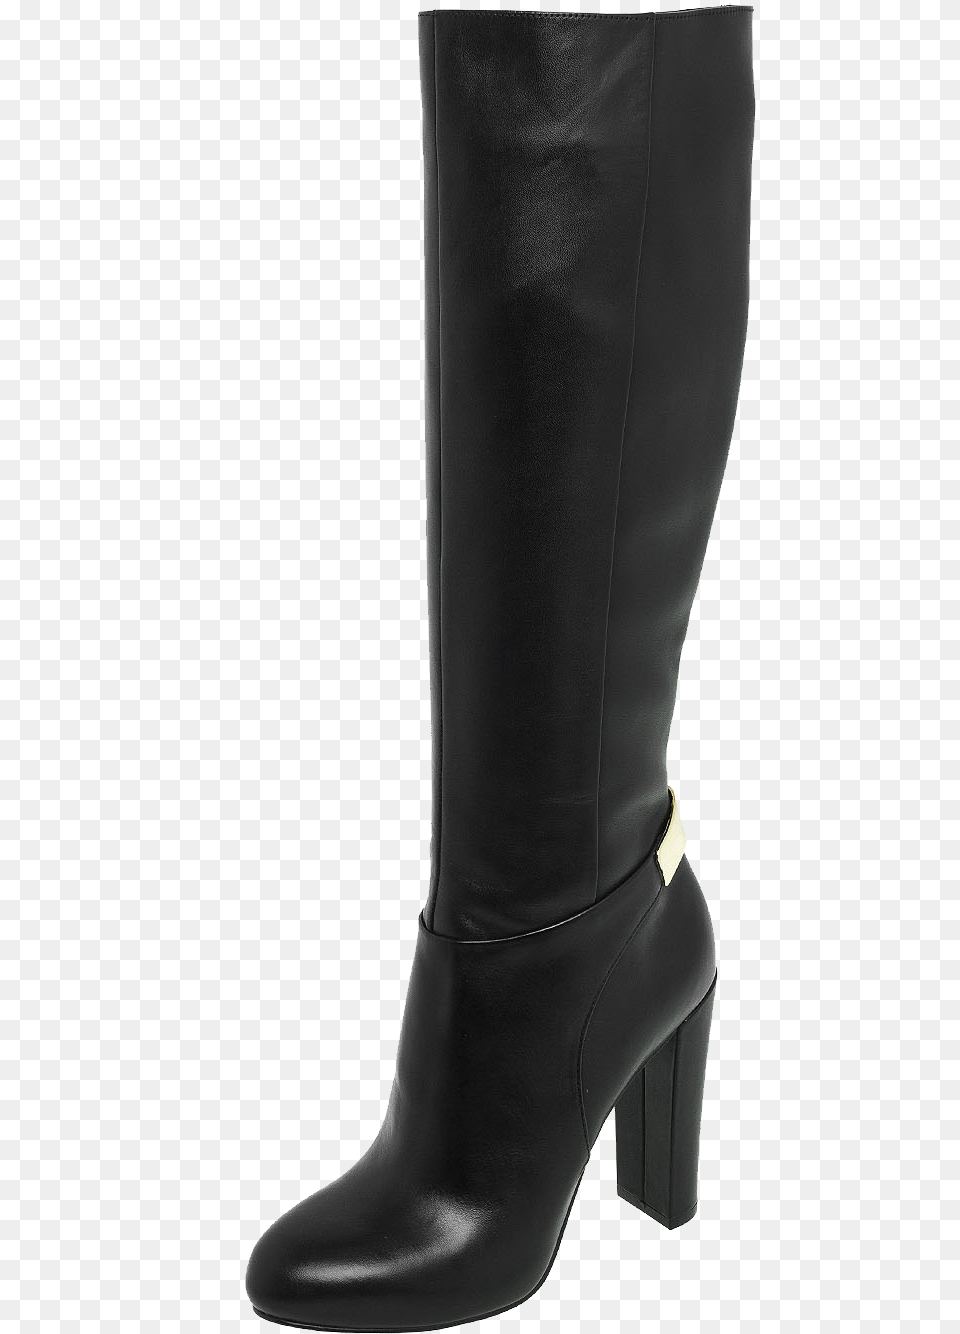 Black Women Boots High Heel Boots Transparent Background, Clothing, Footwear, High Heel, Shoe Png